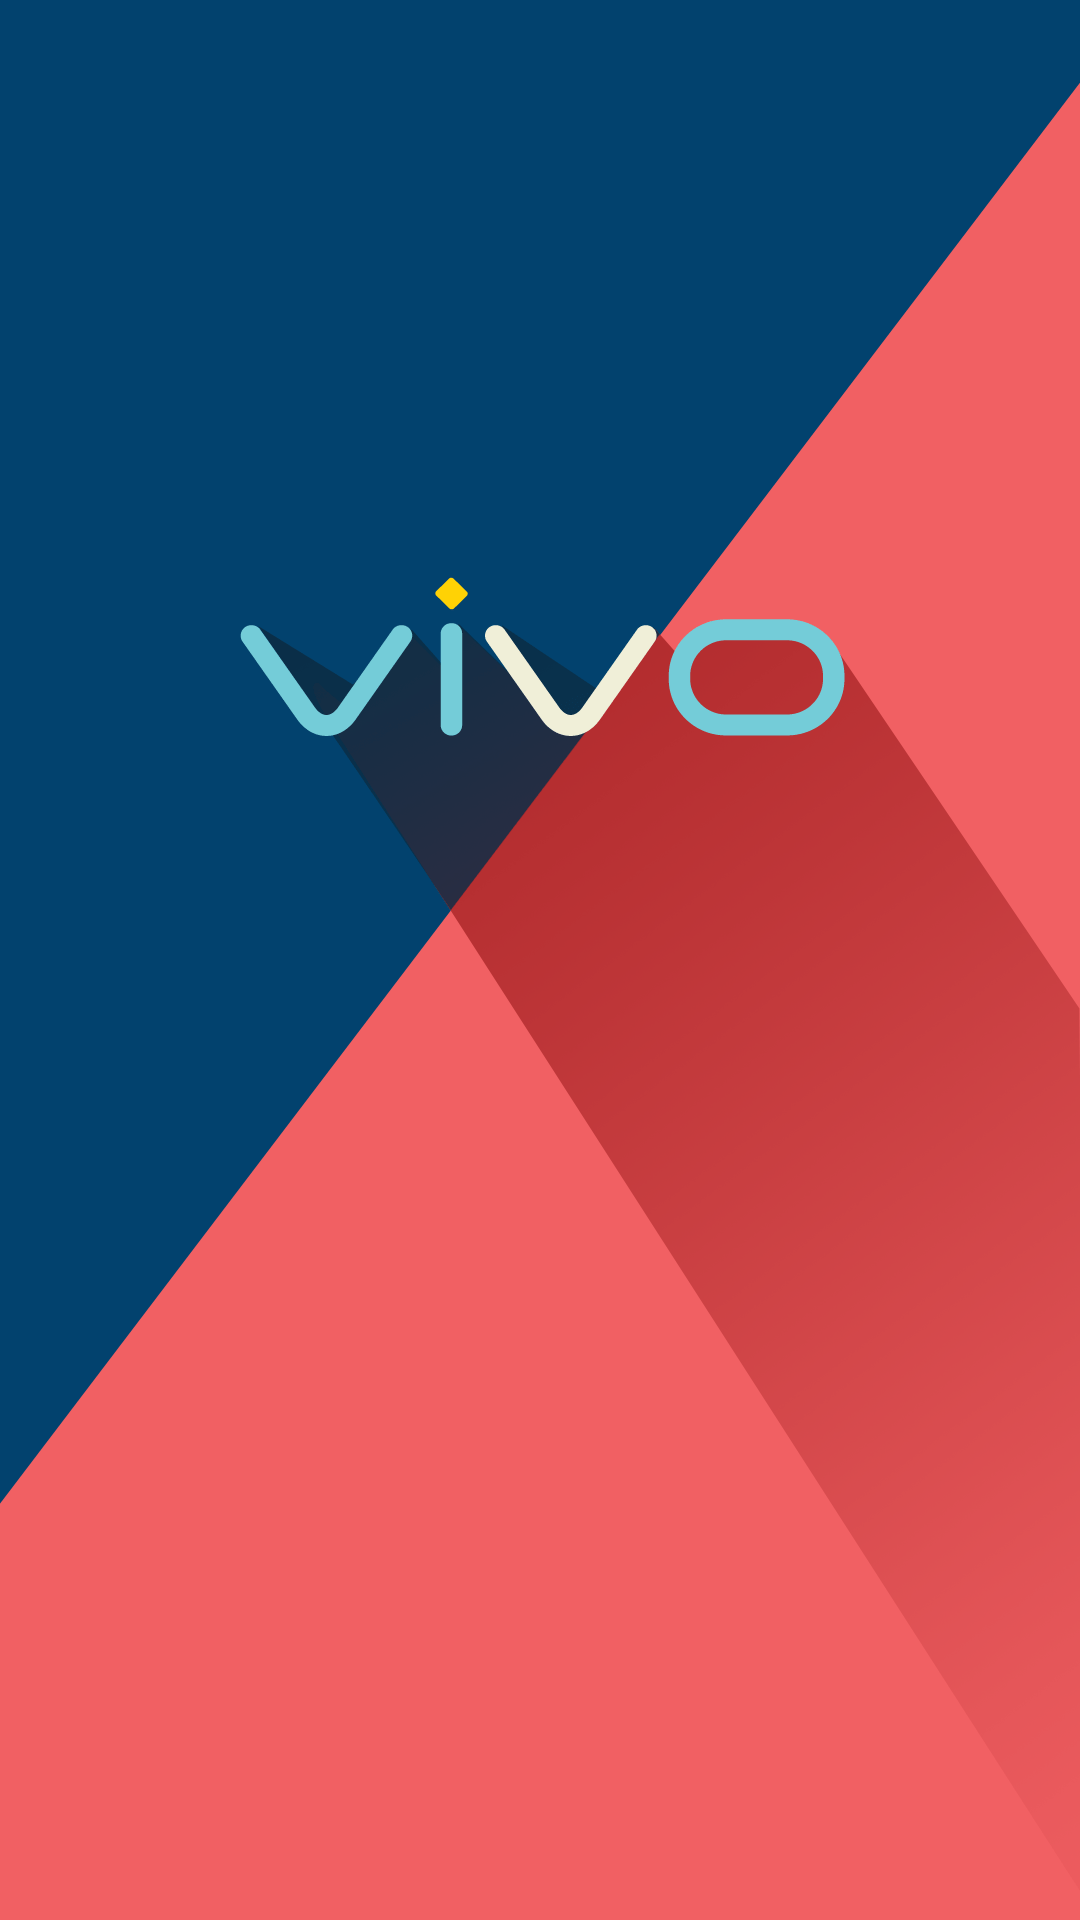 Vivo Logo Wallpapers - Wallpaper Cave